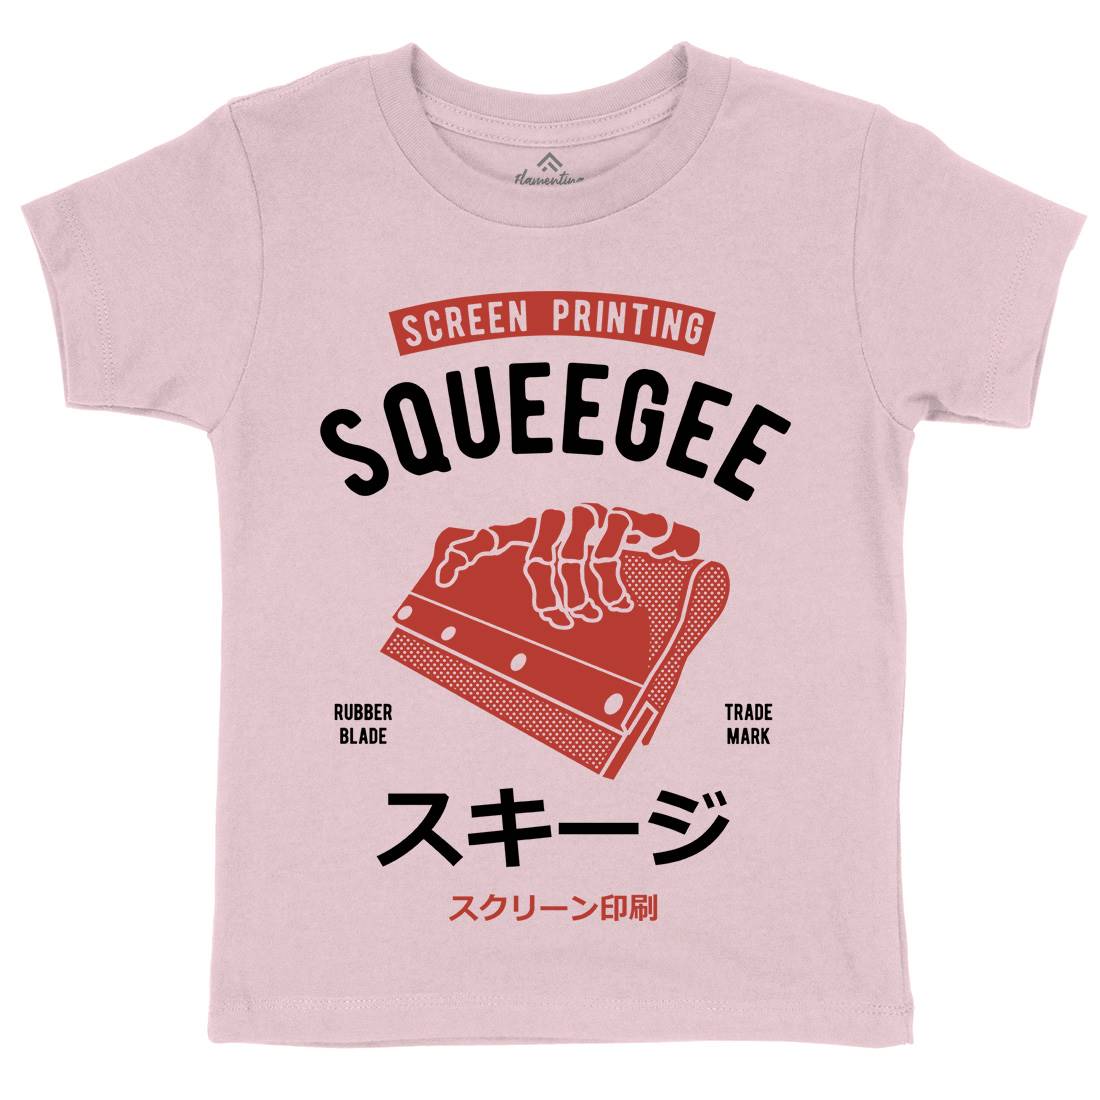 Squeegee Social Club Kids Crew Neck T-Shirt Work A282